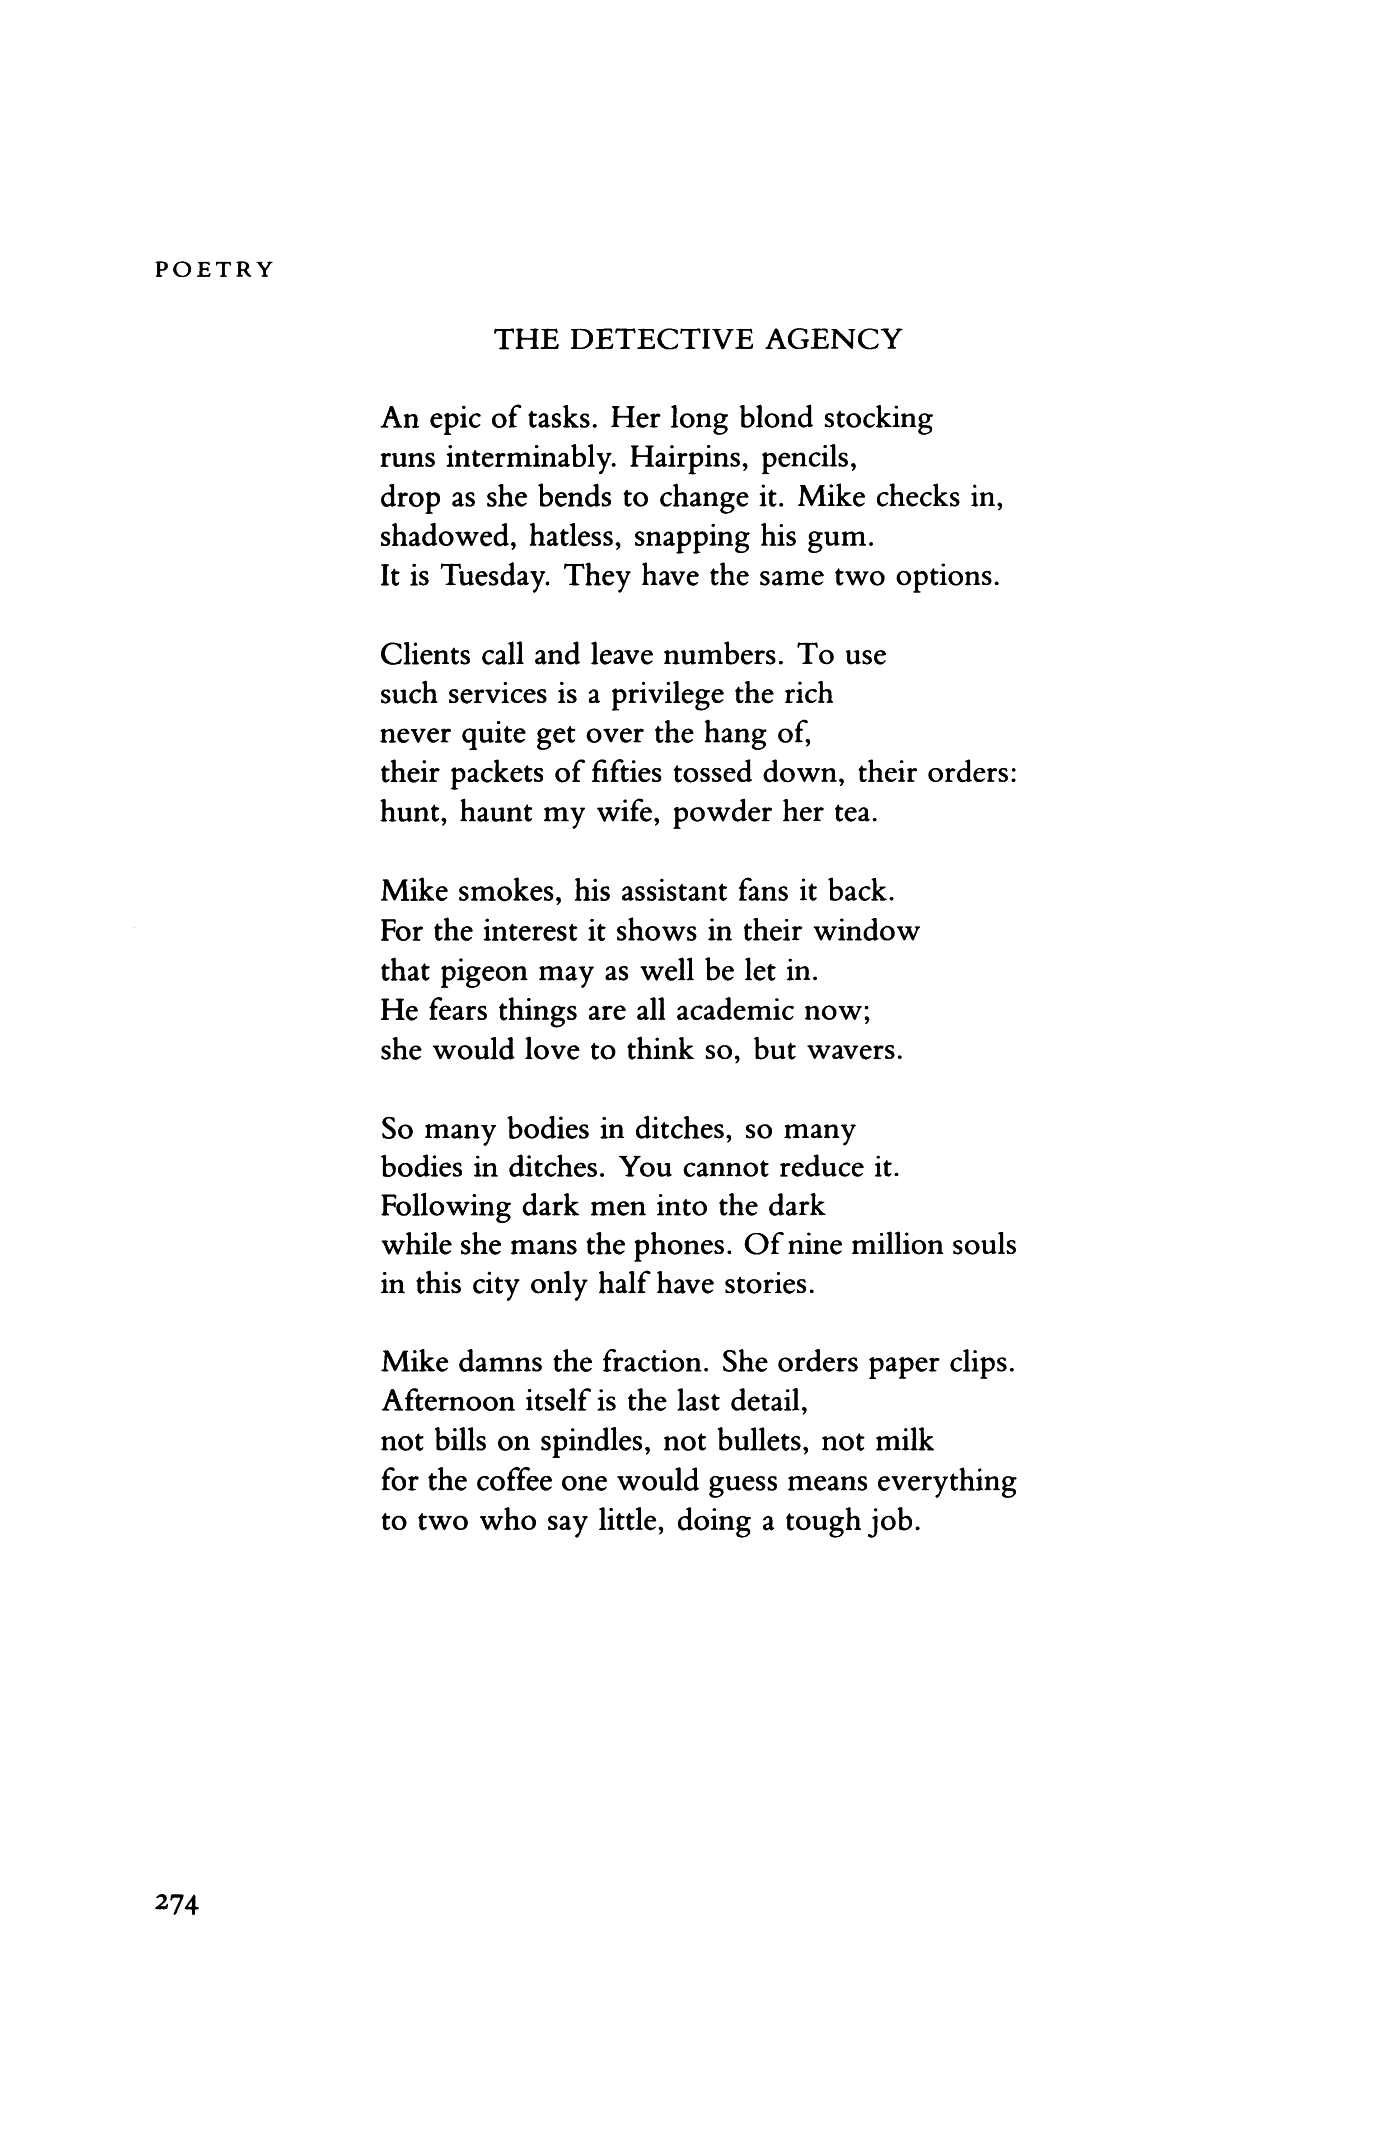 white stocking poem